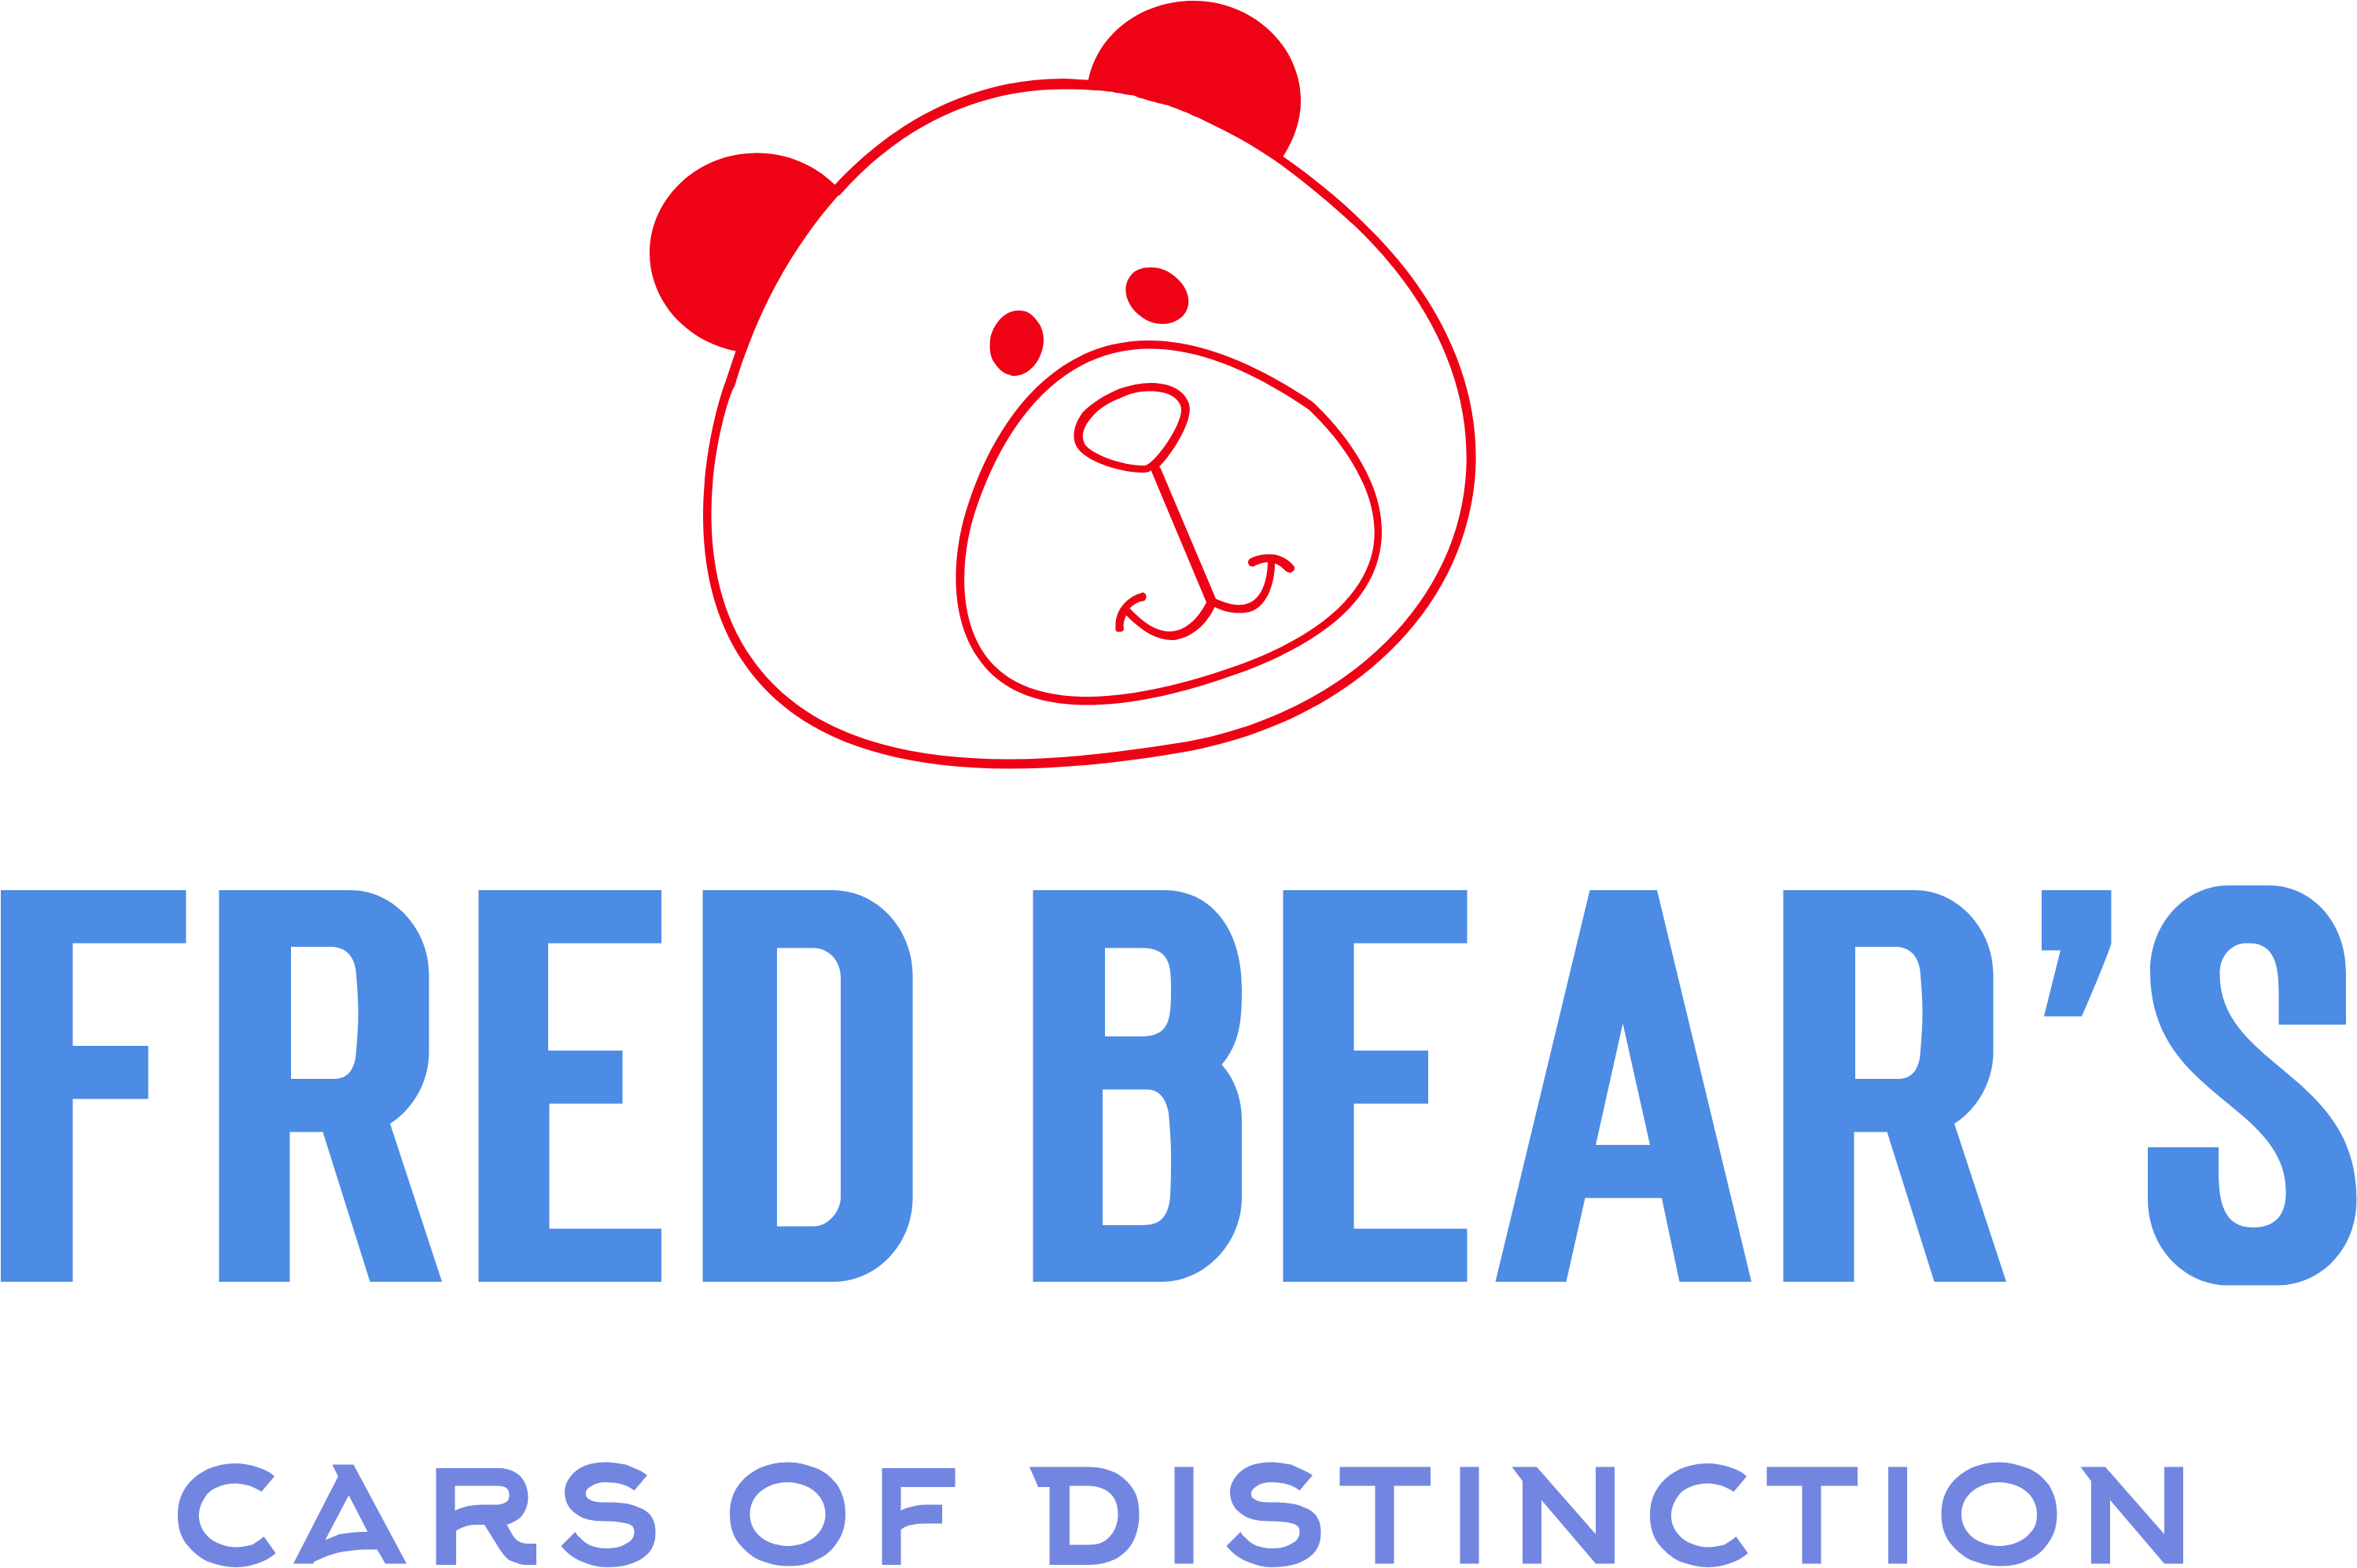 A Logo With A Bear Face